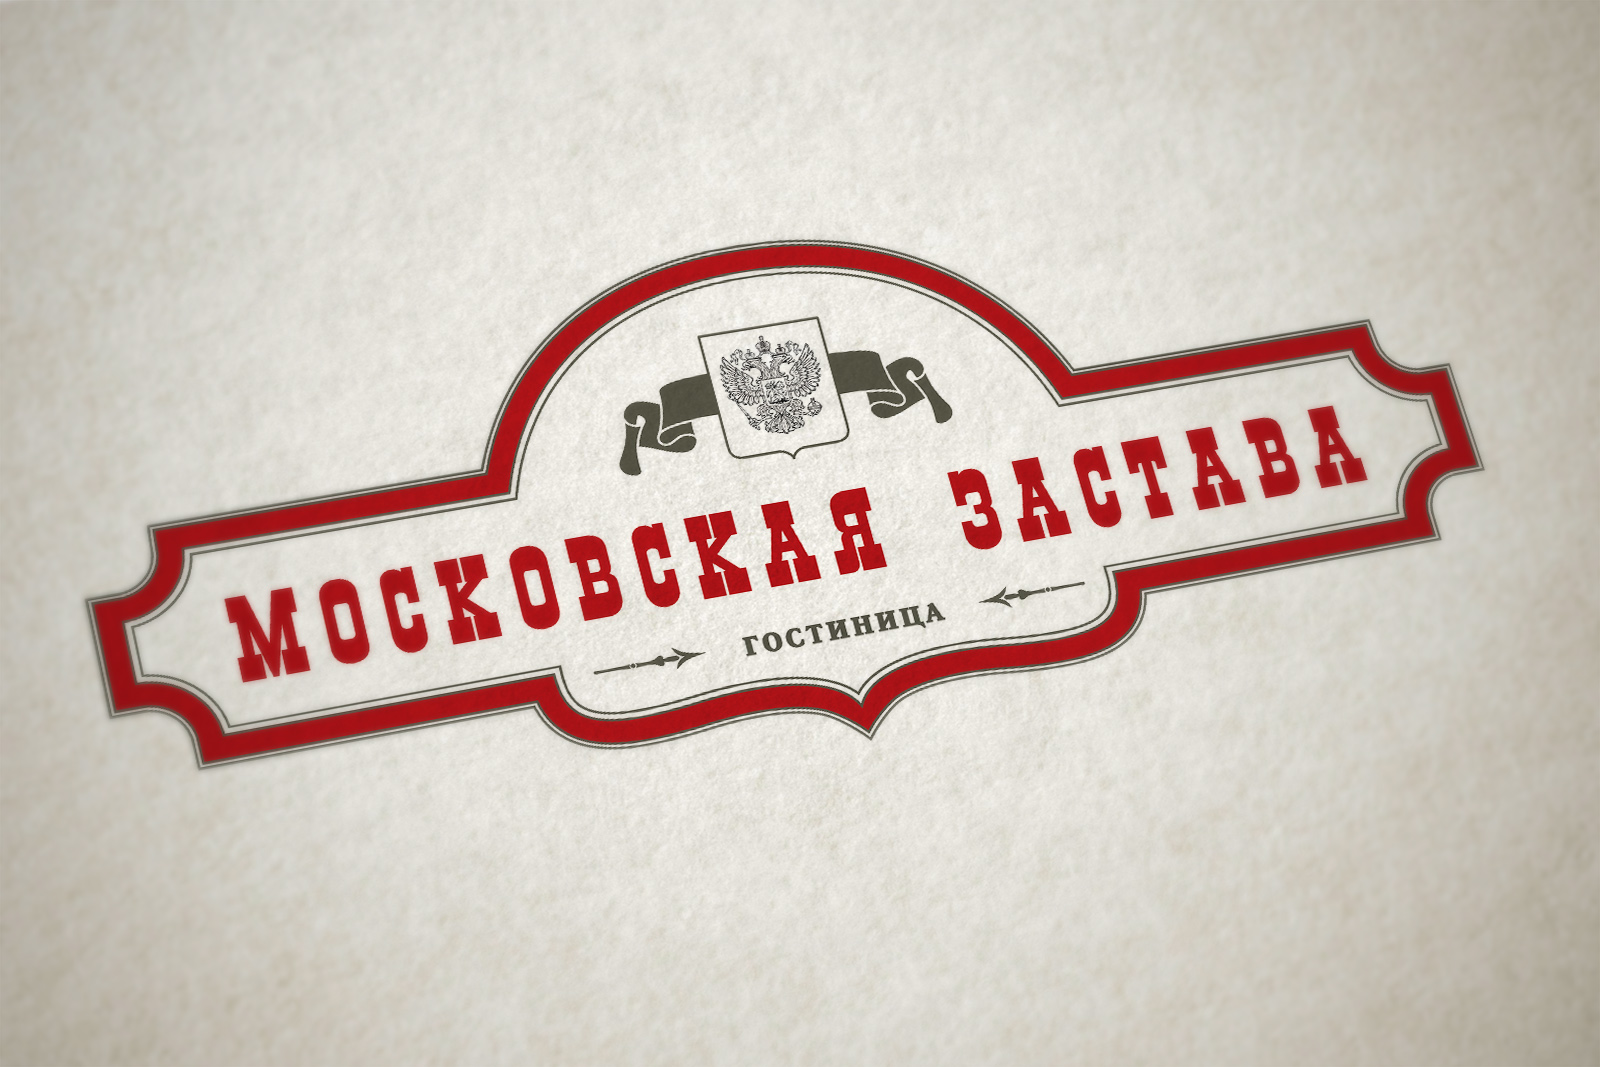 гостиница московская застава в костроме